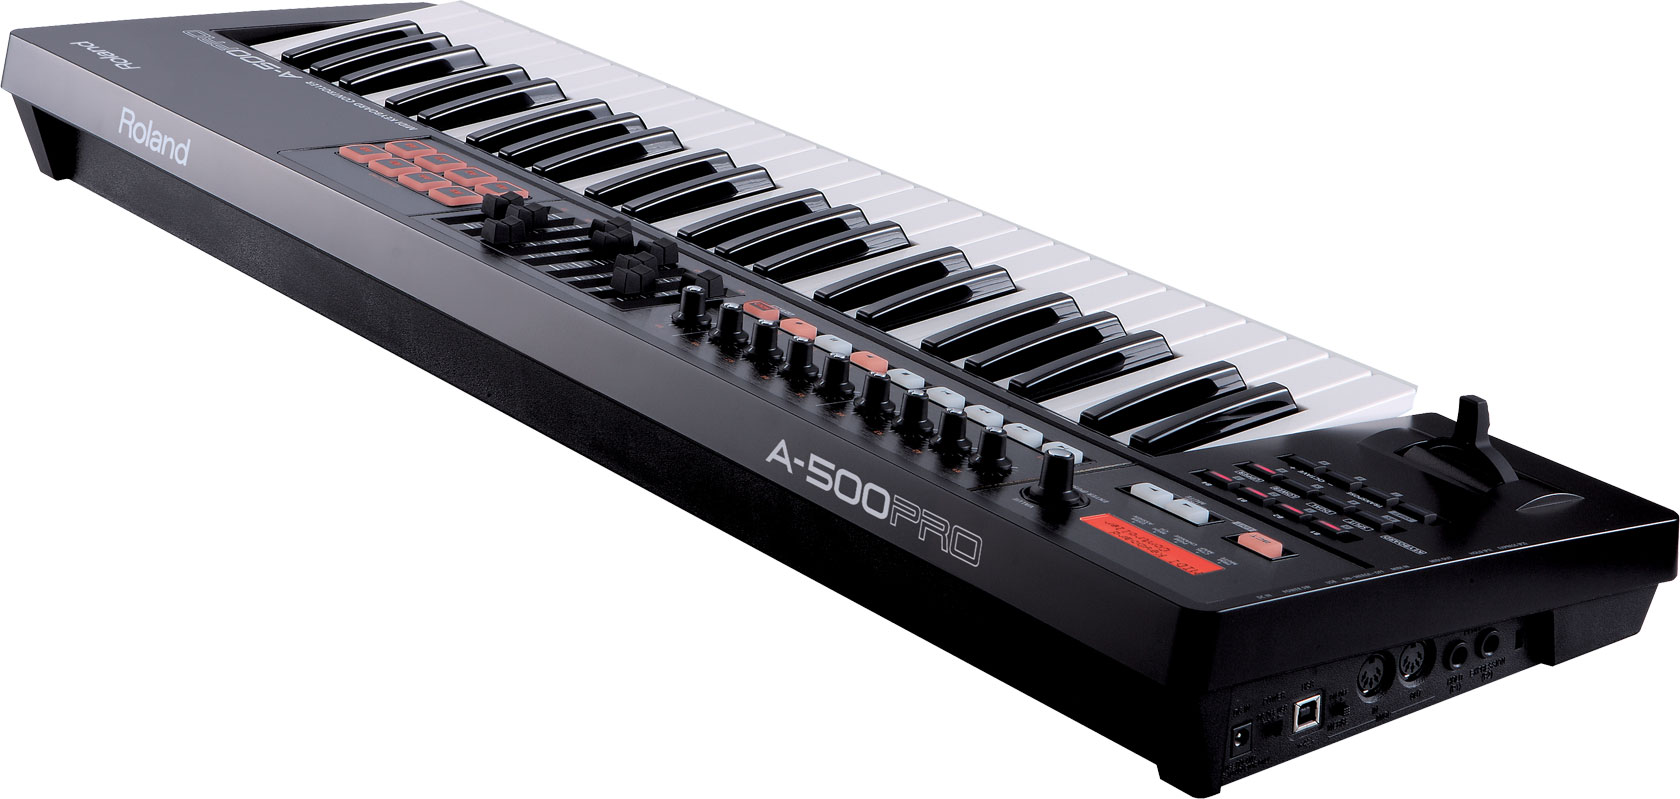 Roland A500 Pro-r - Controller-Keyboard - Variation 2